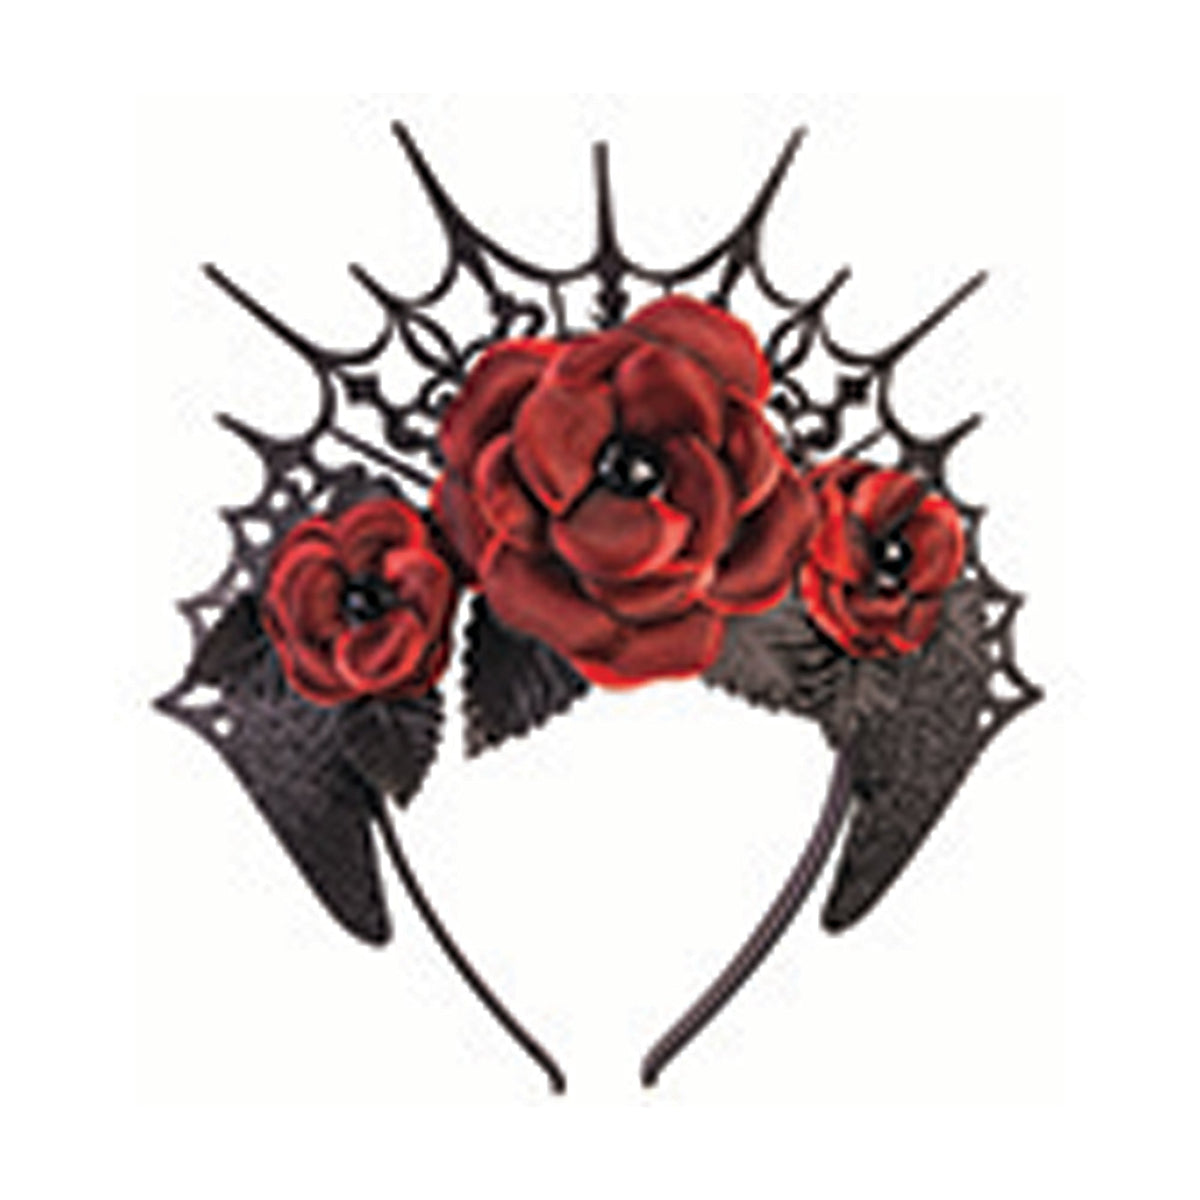 FORUM NOVELTIES INC Costume Accessories Vampiress rose headband for adults 721773831010